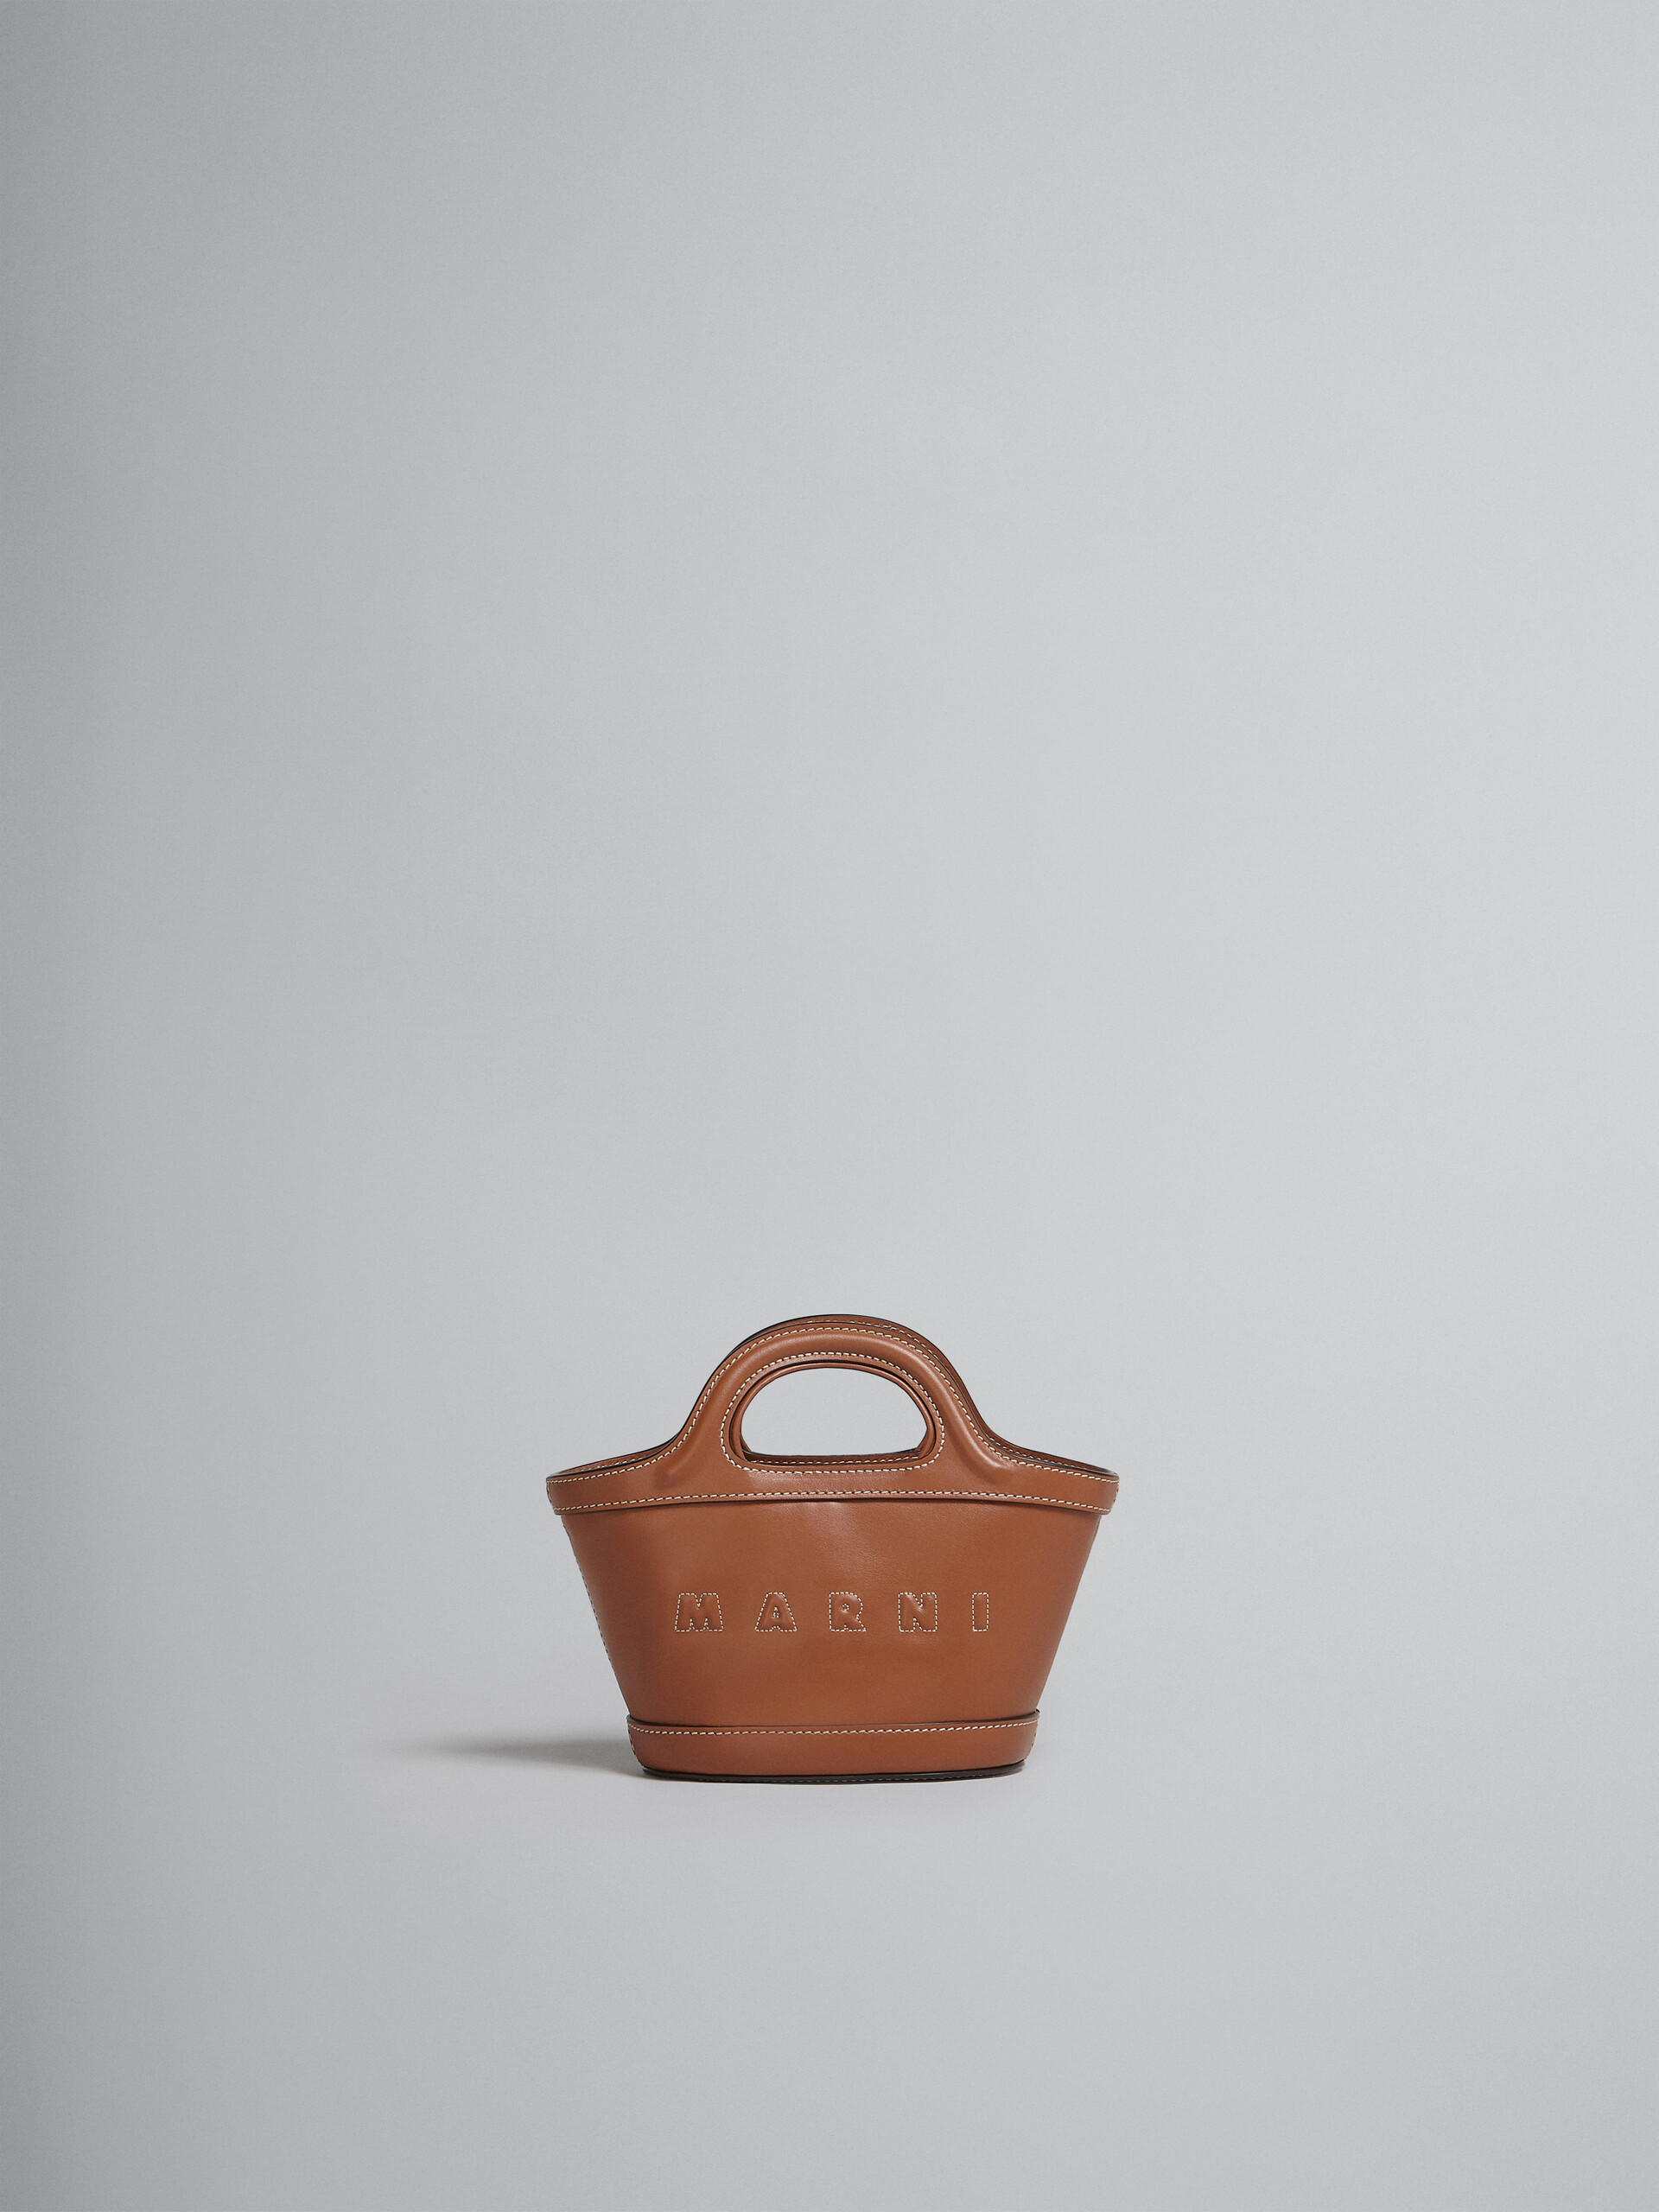 Tropicalia Micro Bag in brown leather - Handbags - Image 1